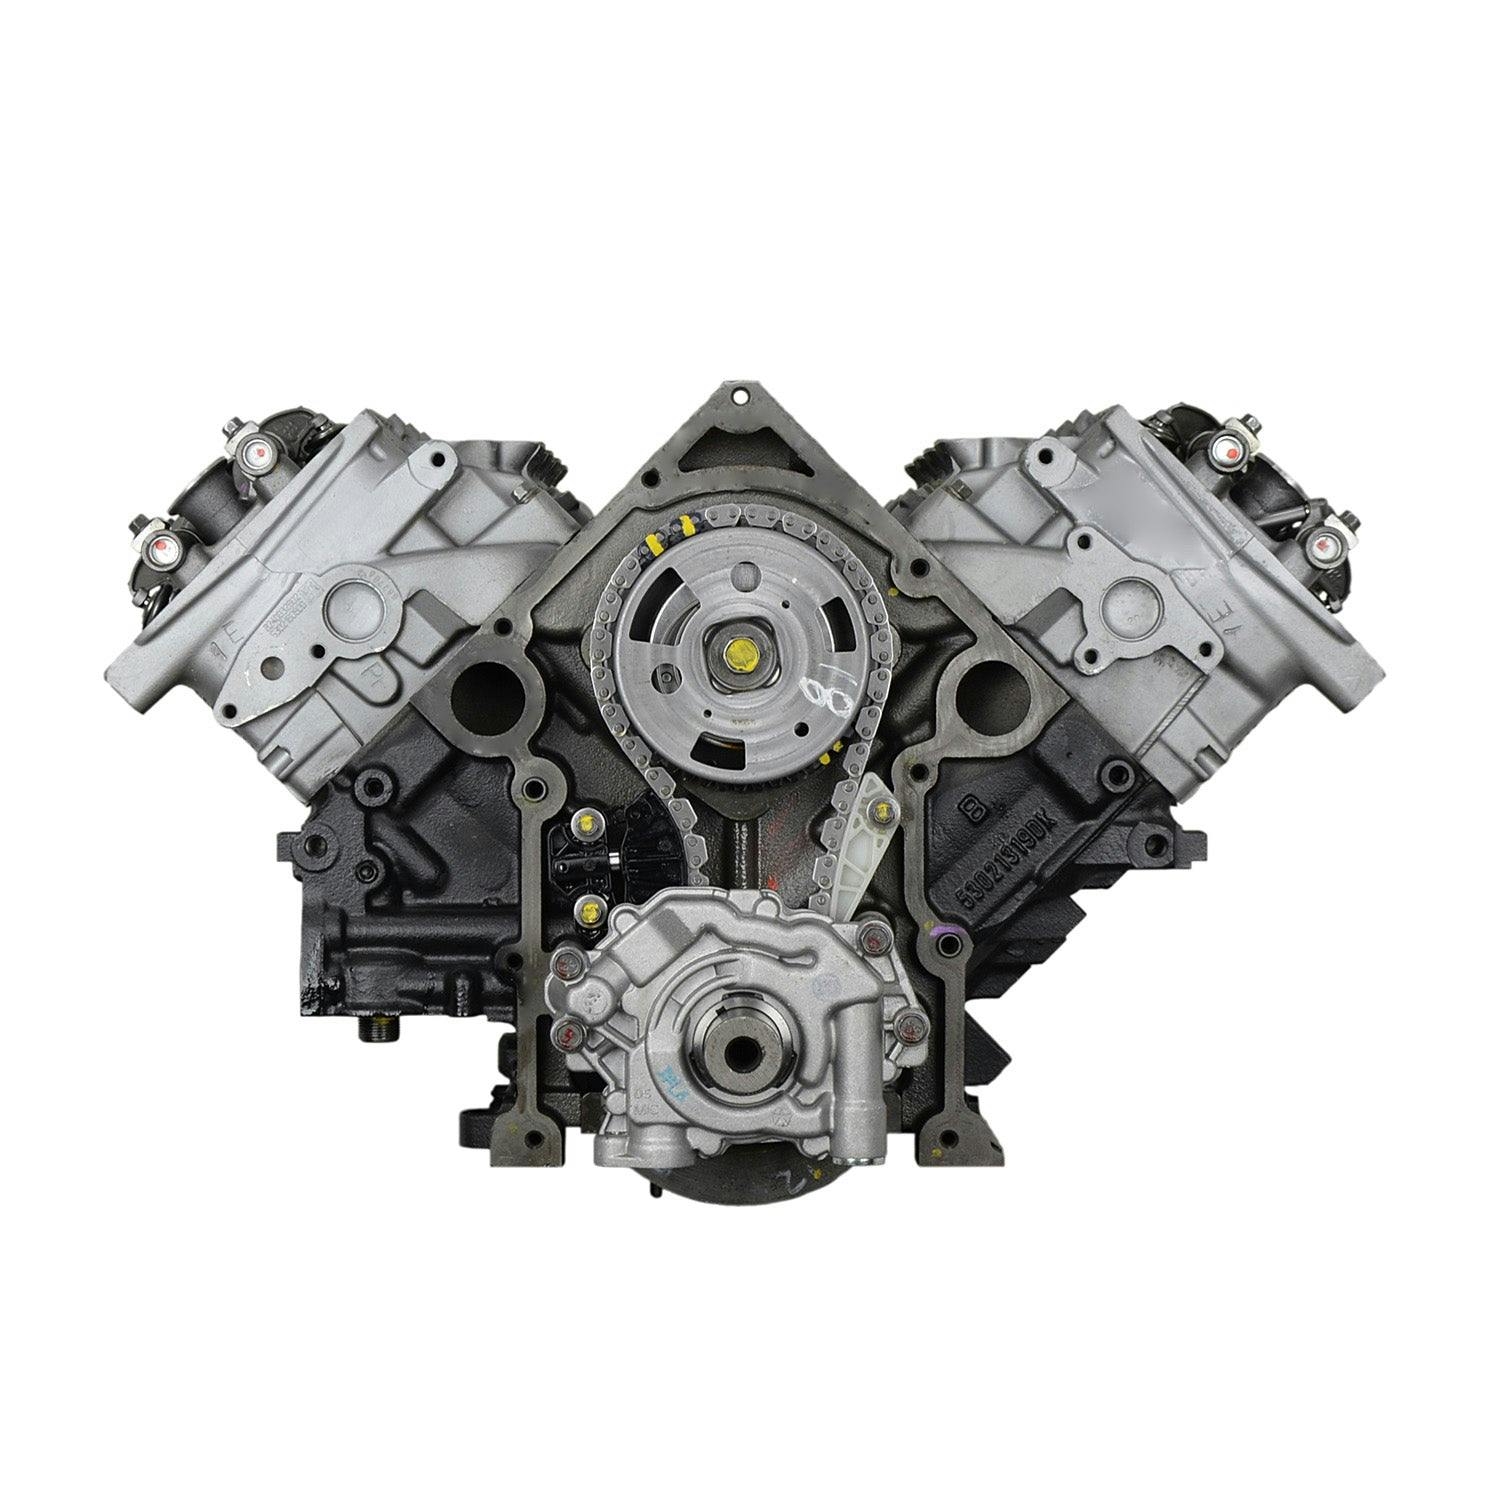 5.7L V8 Engine for 2010-2014 Chrysler 300/Dodge Challenger, Charger, Durango/Jeep Commander, Grand Cherokee